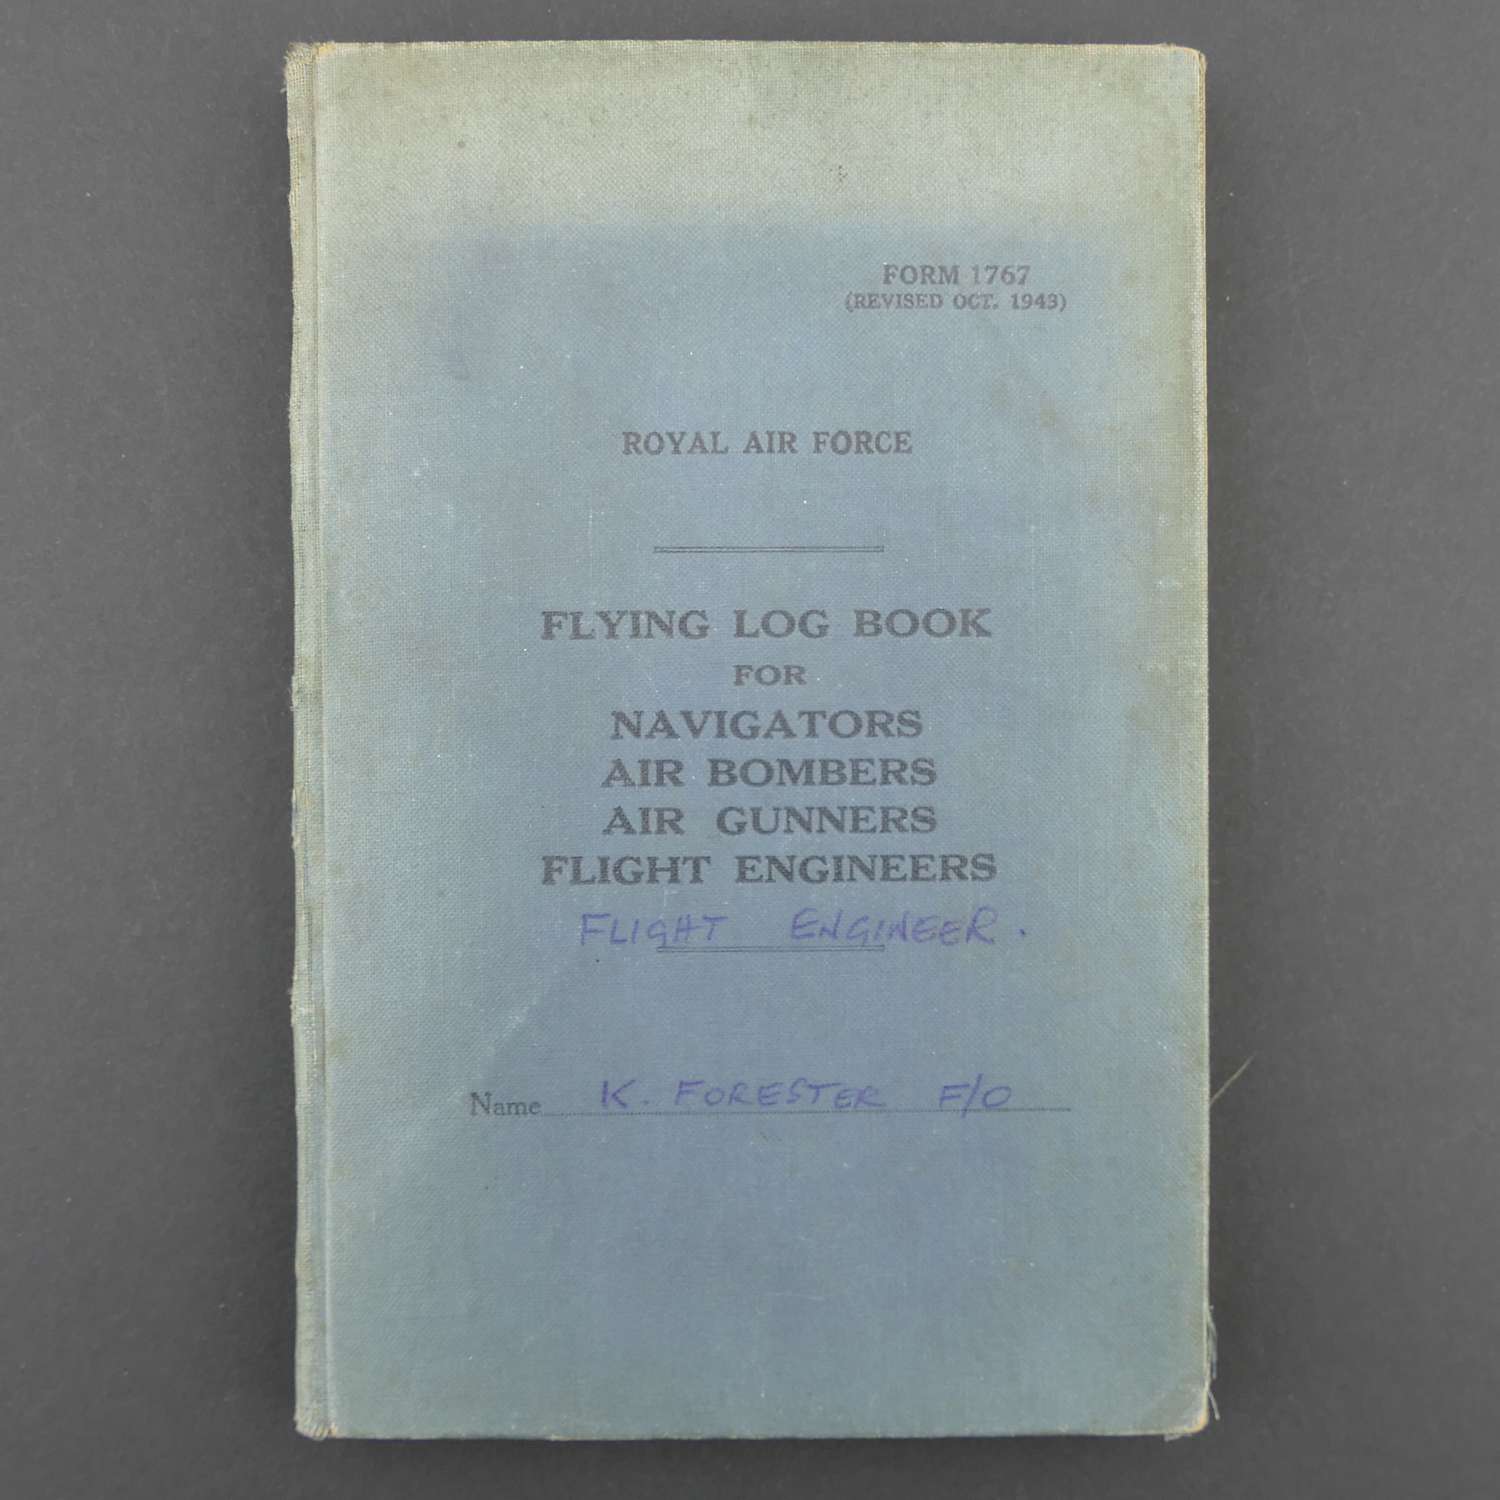 RAF flight engineer's log book, 90 squadron, full tour